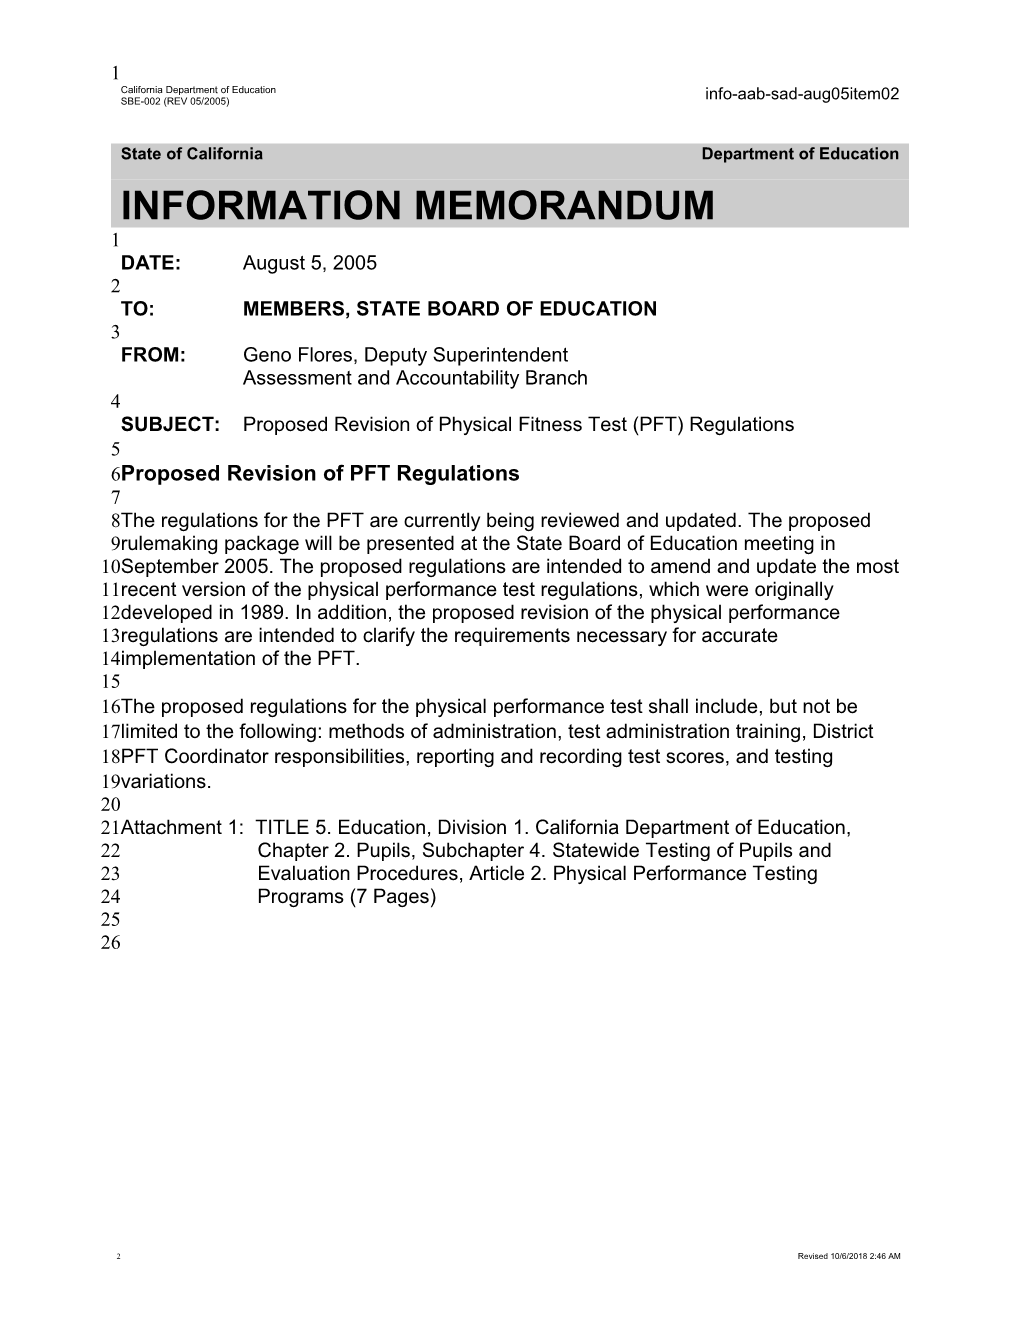 August 2005 Agenda Item 2 - Information Memorandum (CA State Board of Education)